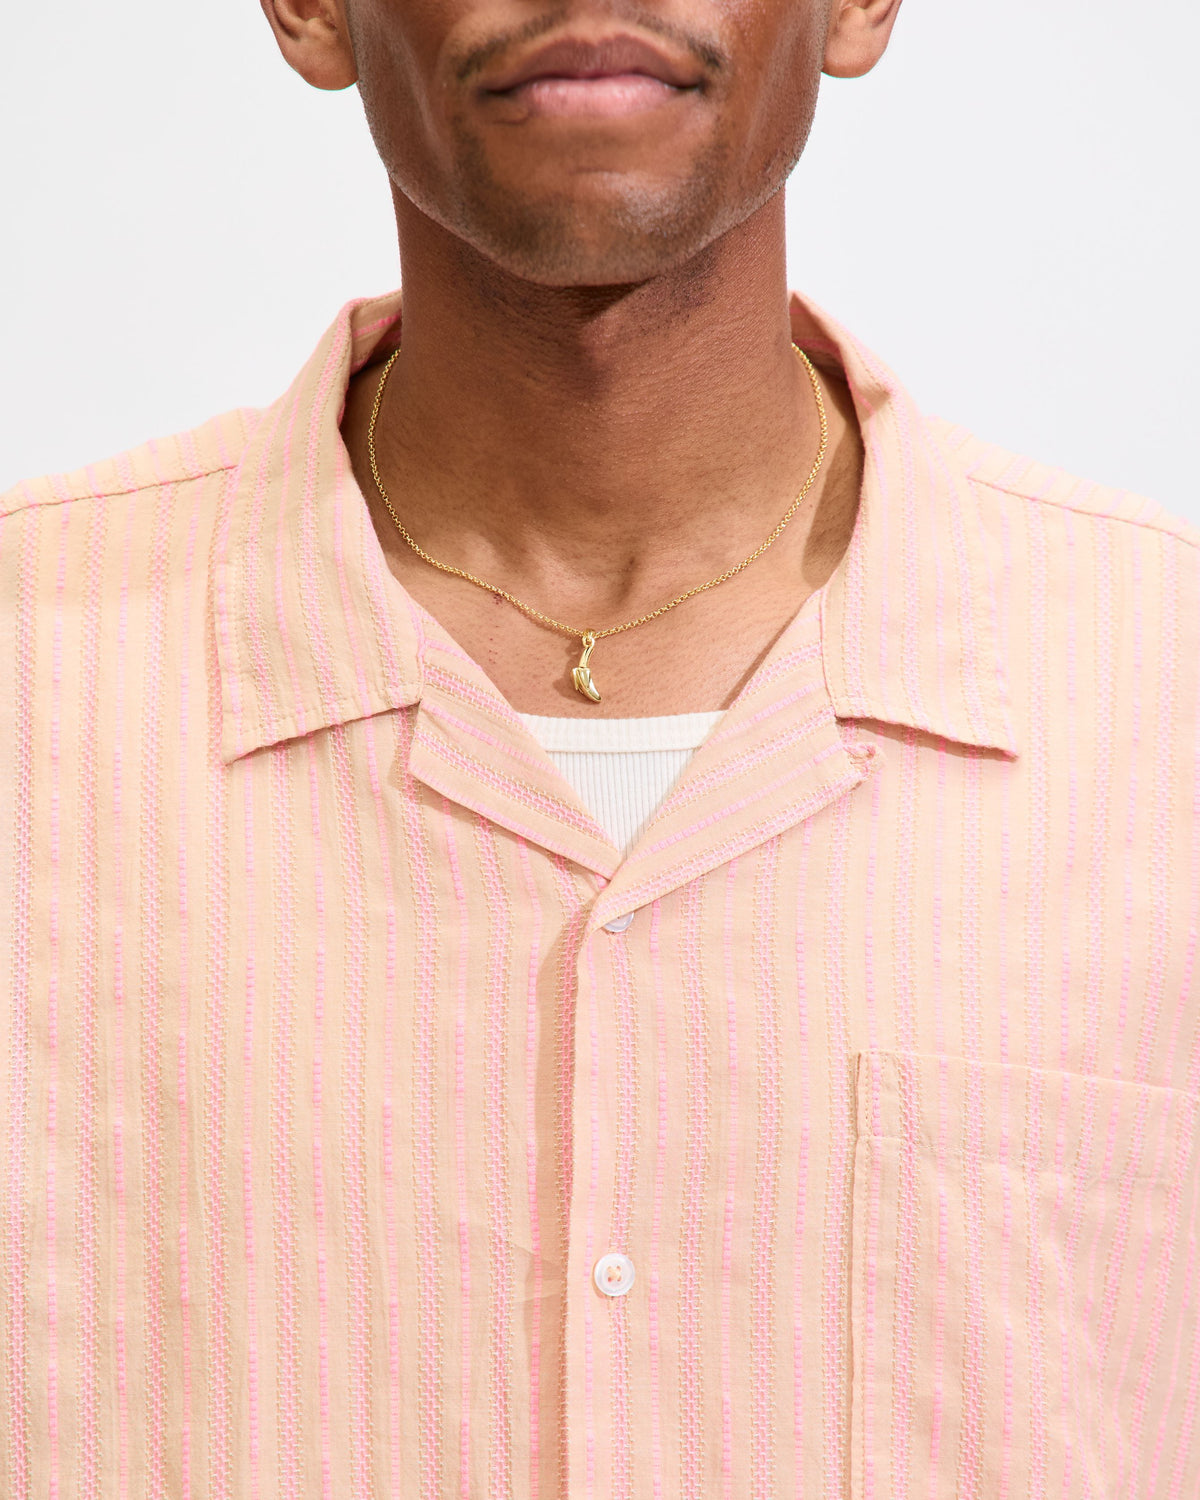 Road Shirt In Beige/Pink Fluro Cotton